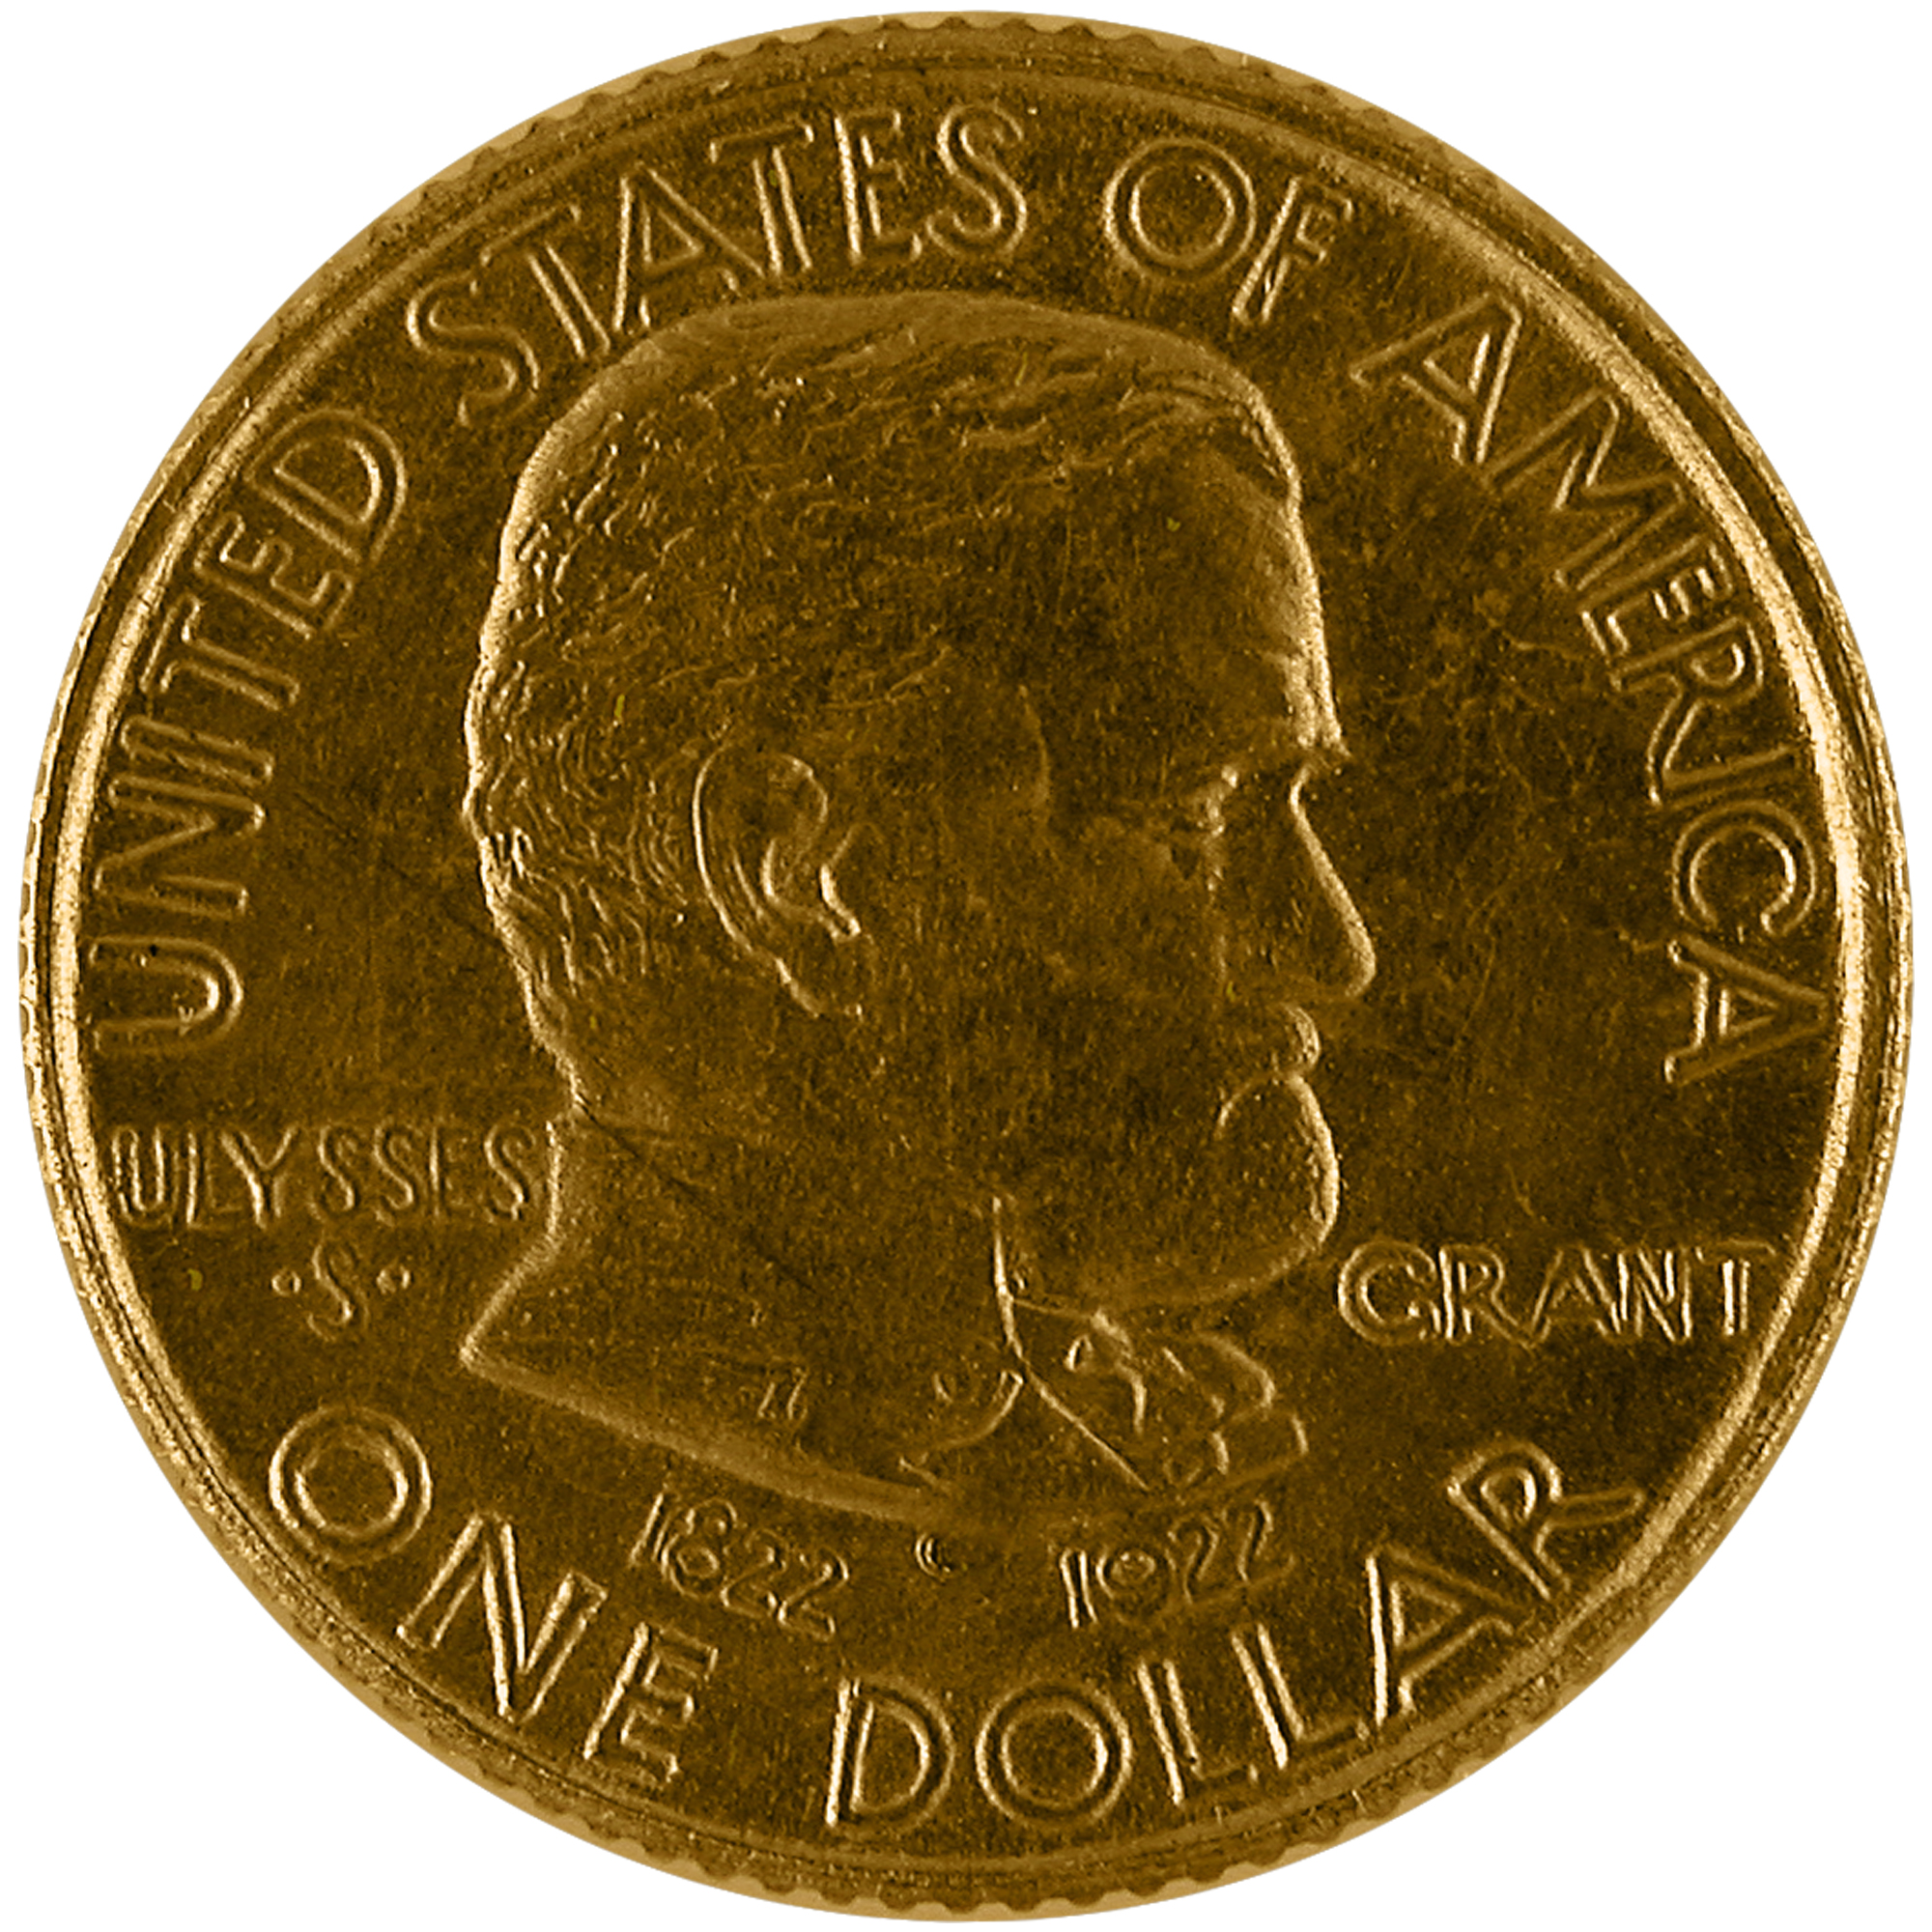 1922 Ulysses S. Grant Memorial Commemorative Gold One Dollar Coin Obverse